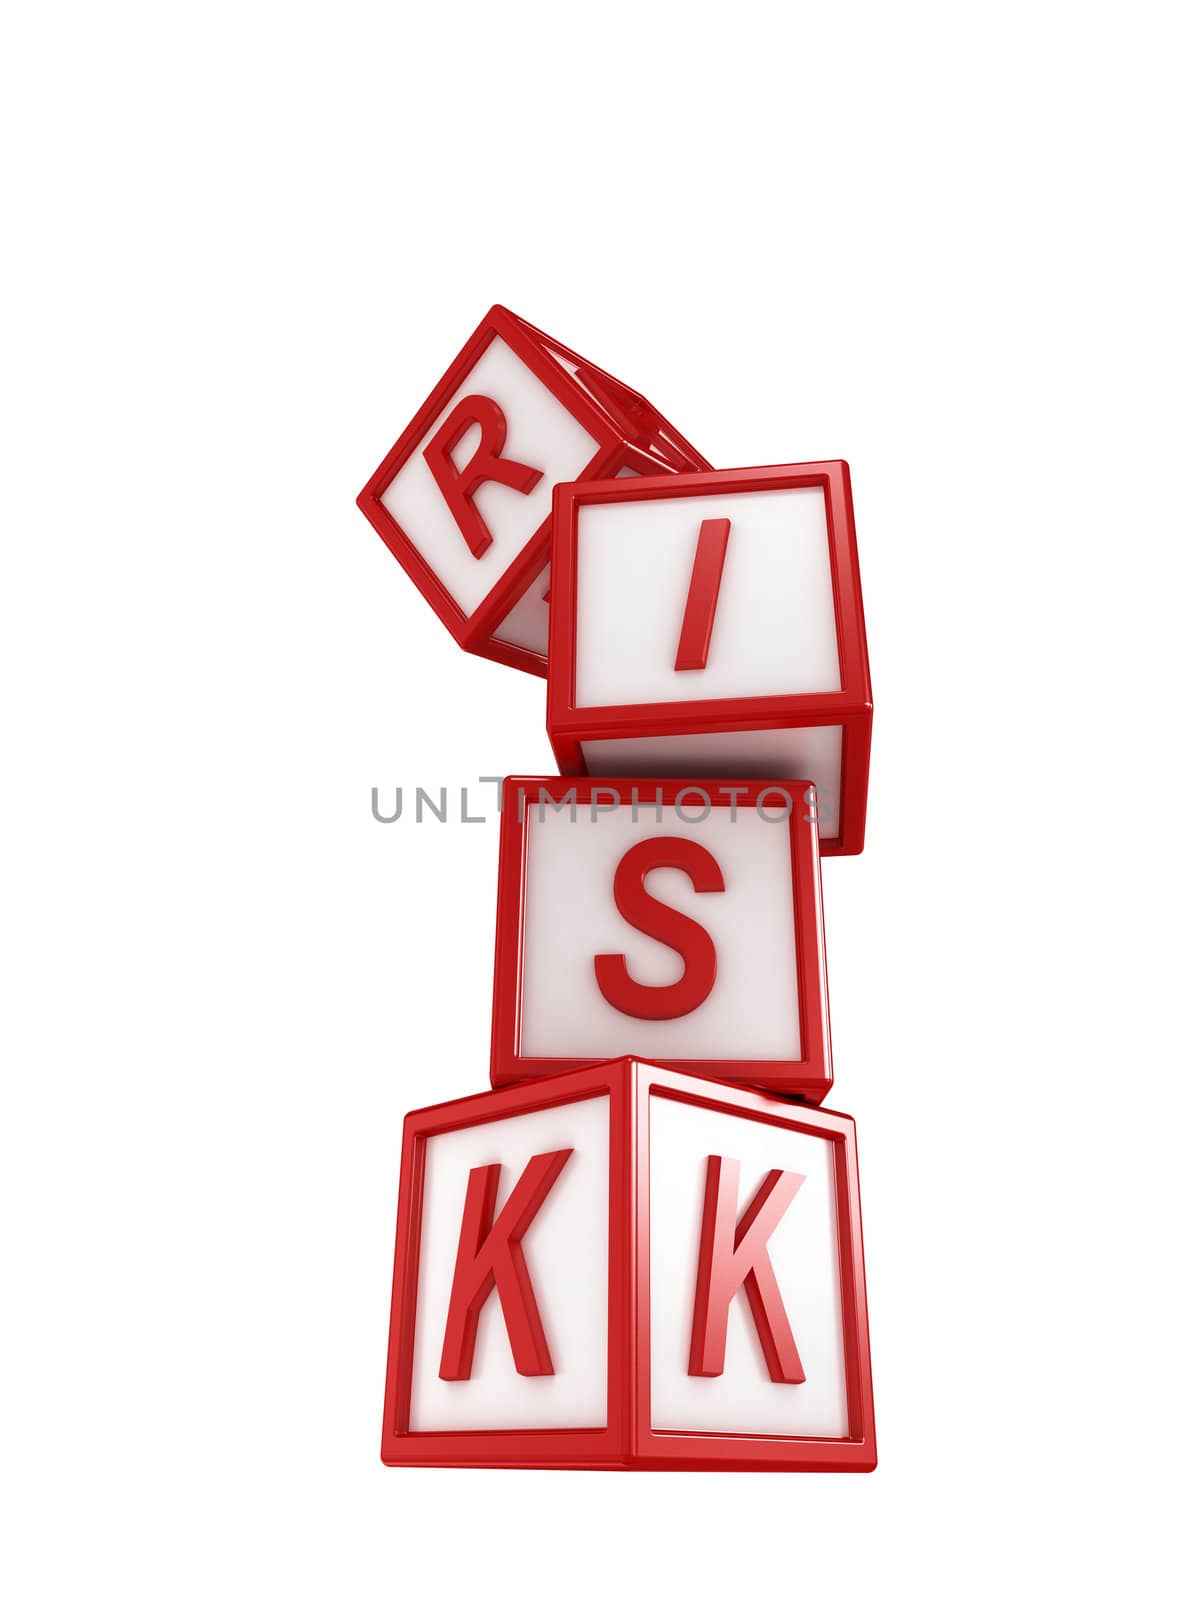 Risk concept. by aleksan